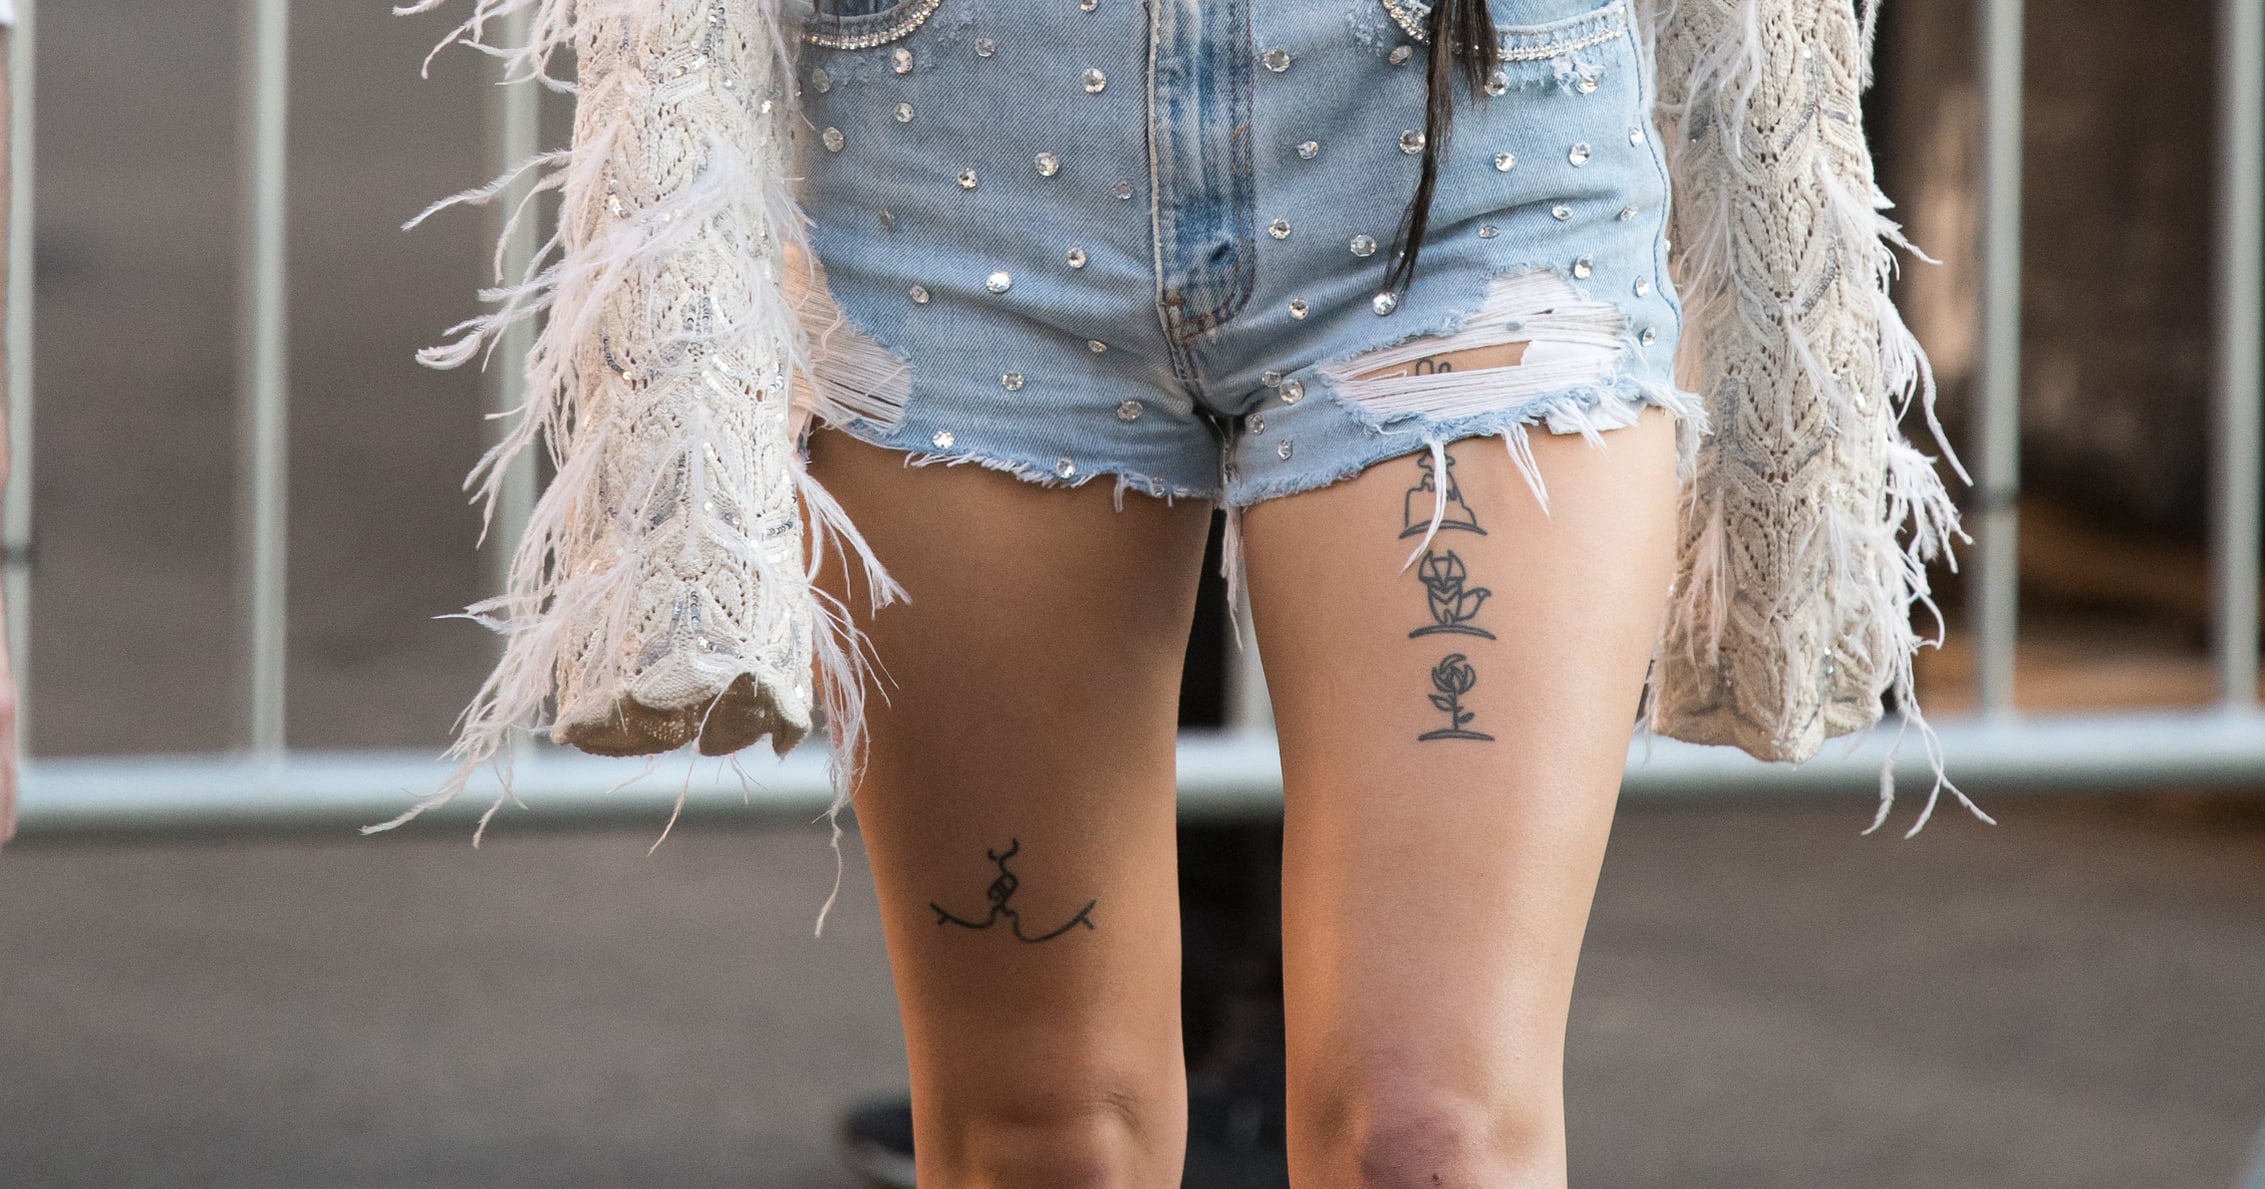 23 Thigh Tattoo Ideas That Make a Statement